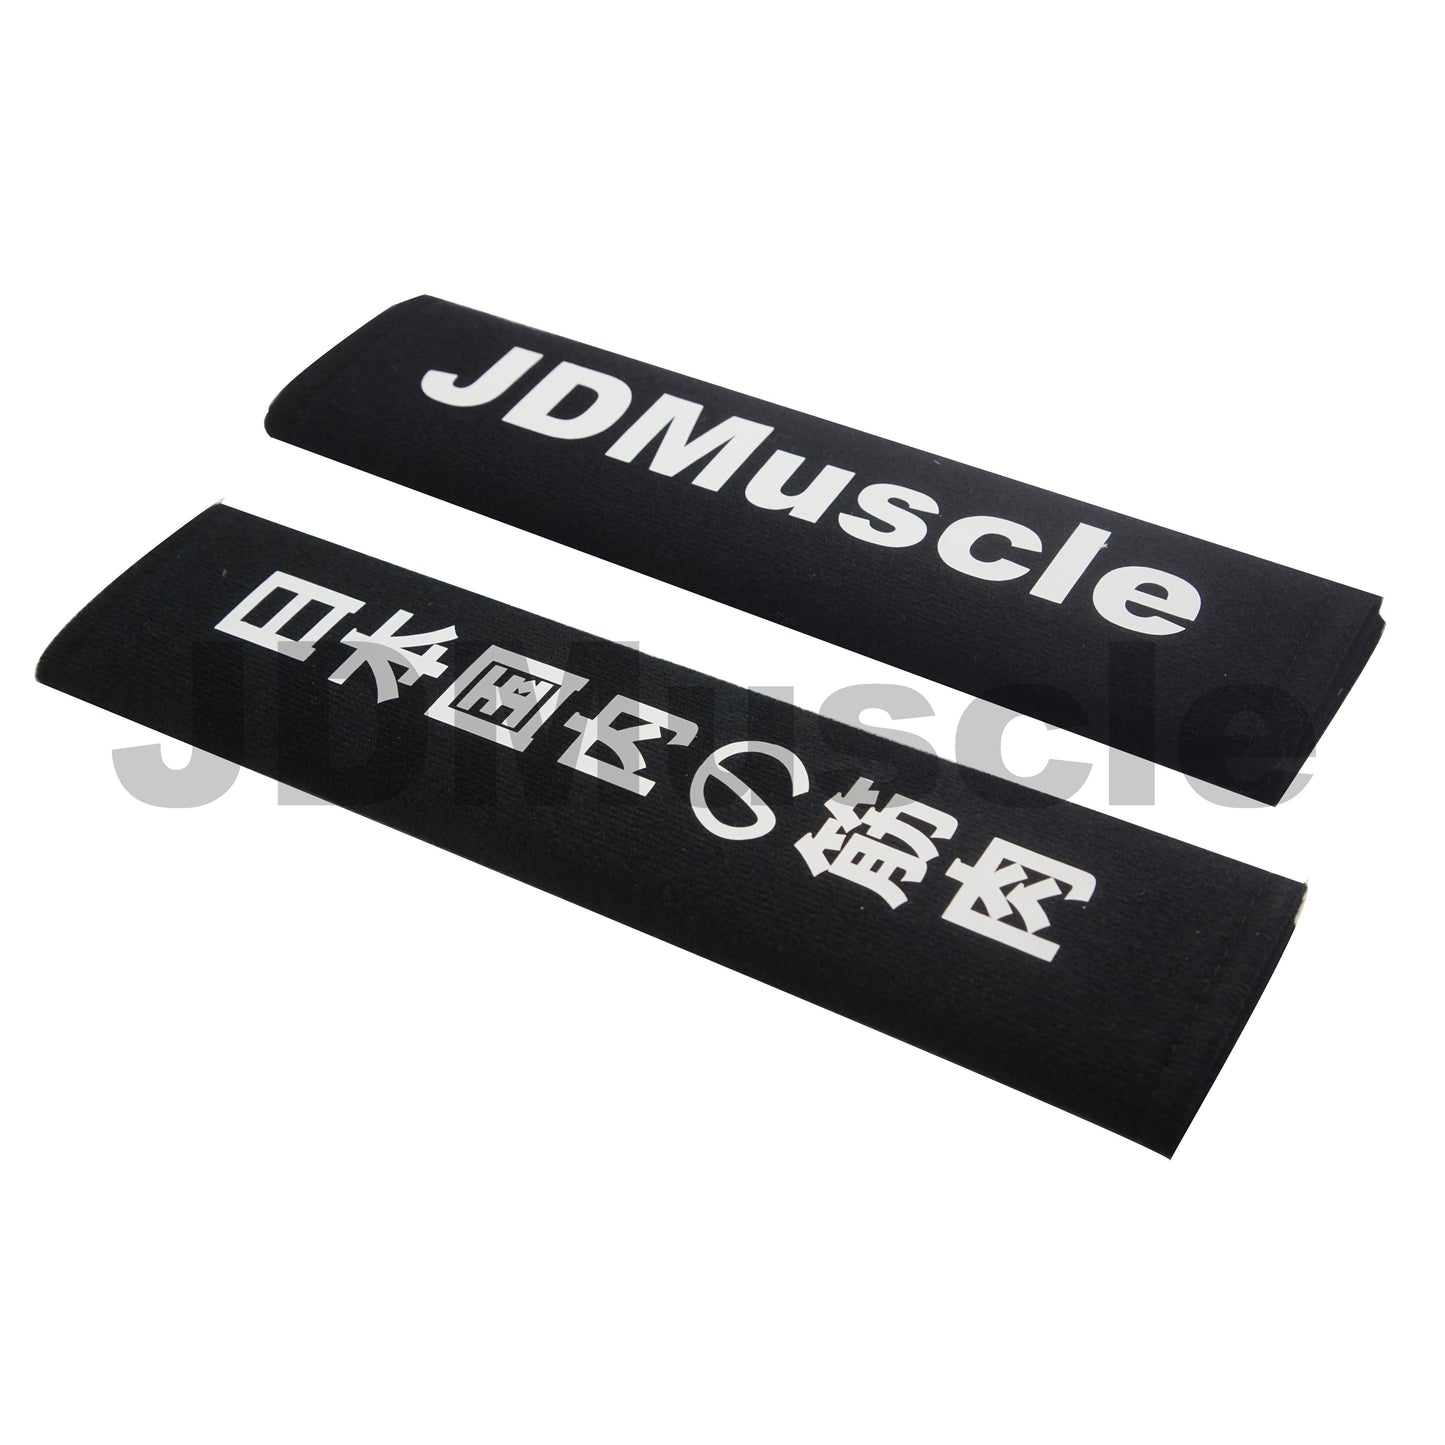 JDMuscle seatbelt shoulder pad - 日本の国内筋肉 - Black-JDM-SB-BLACK-JDM-SB-BLACK-Harness Pads-JDMuscle-Black-JDMuscle